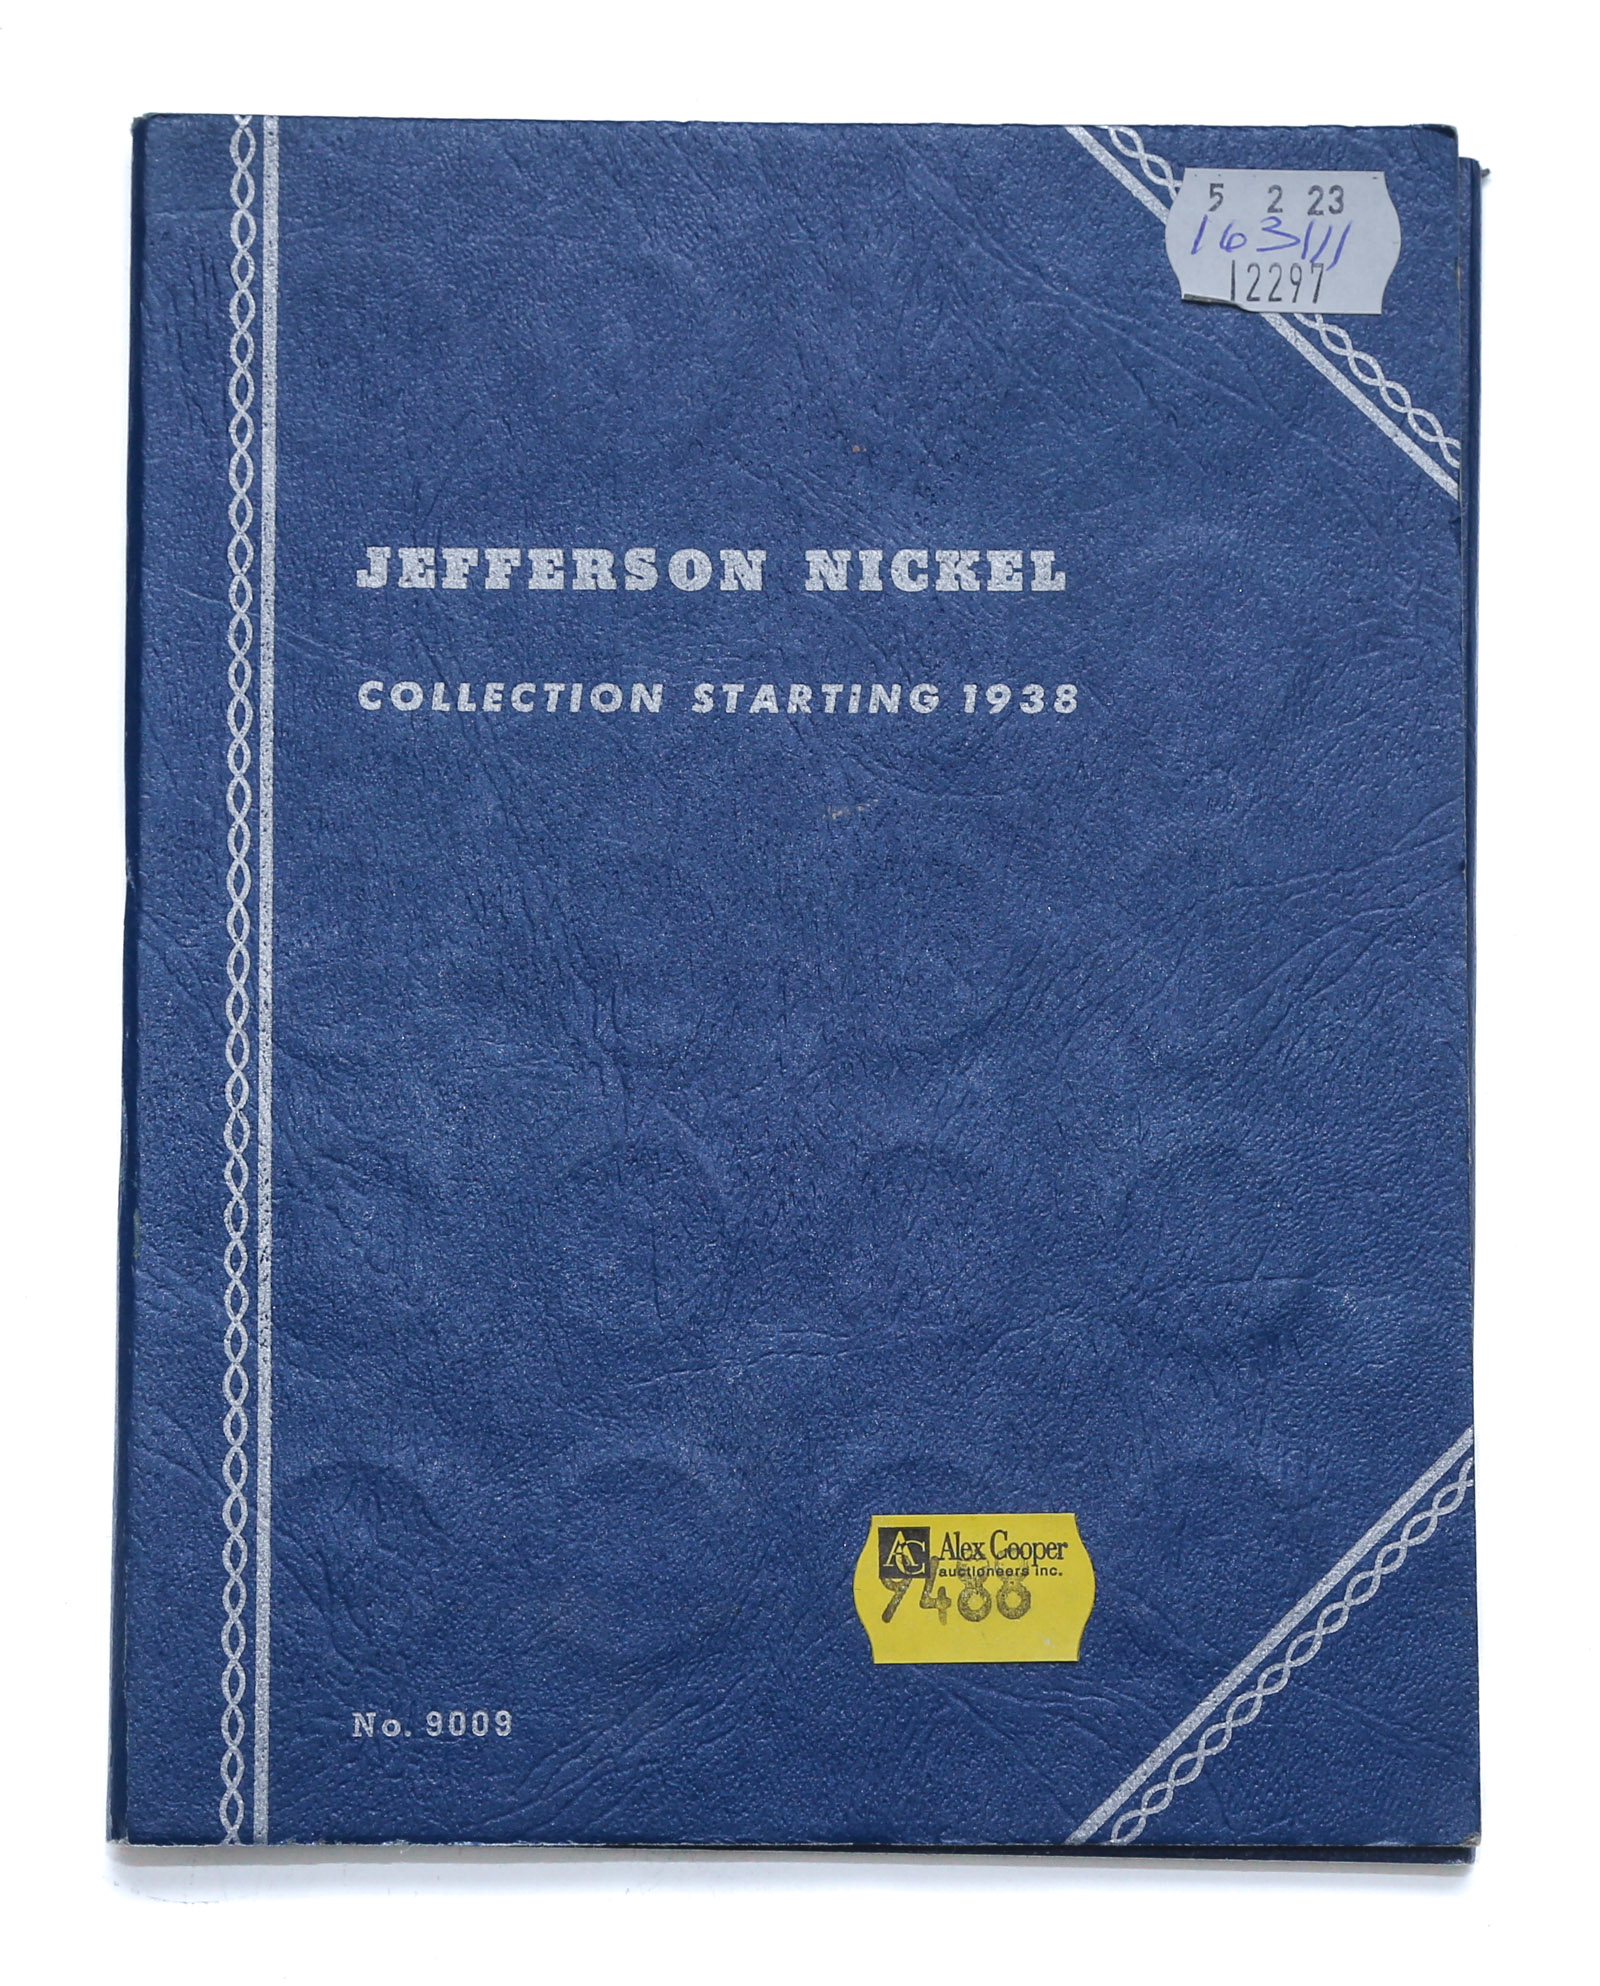 1943 JEFFERSON ALBUM COMPLETE UNTIL